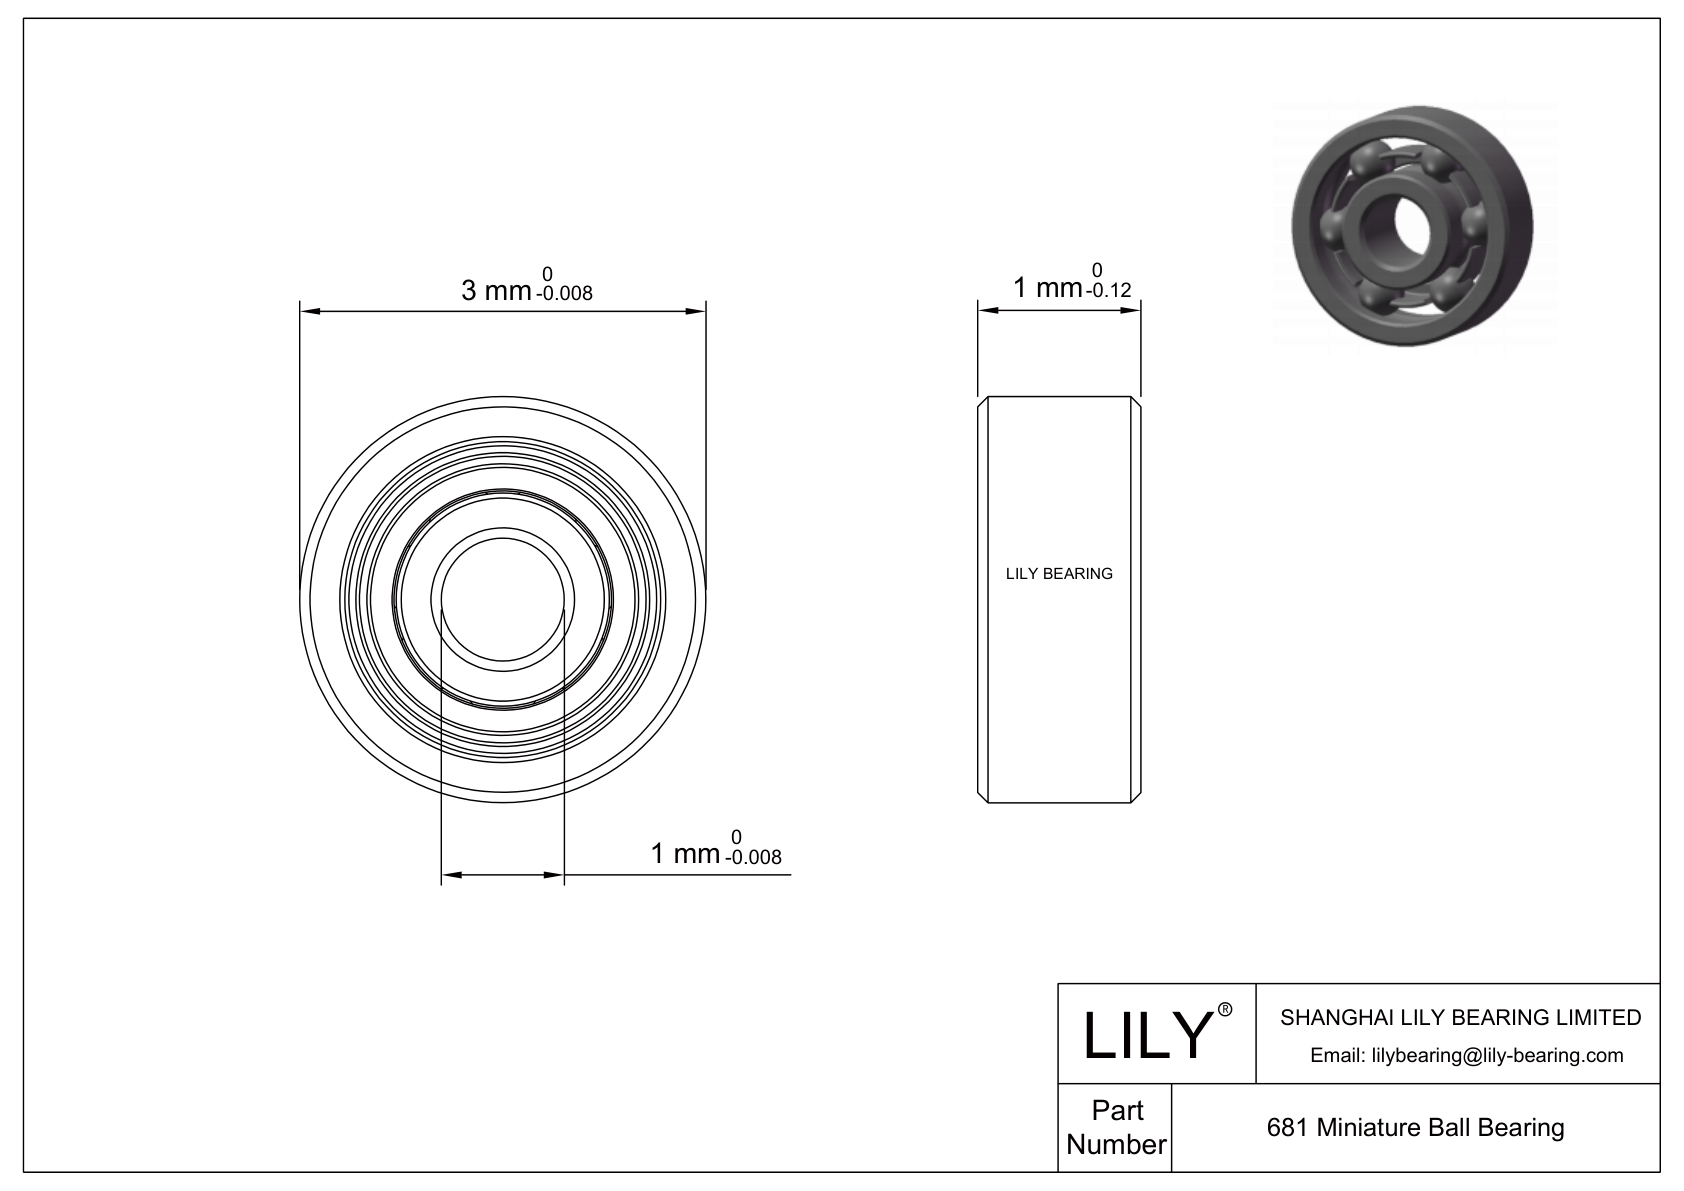 LILY-PU6817-4 Polyurethane Coated Bearing cad drawing